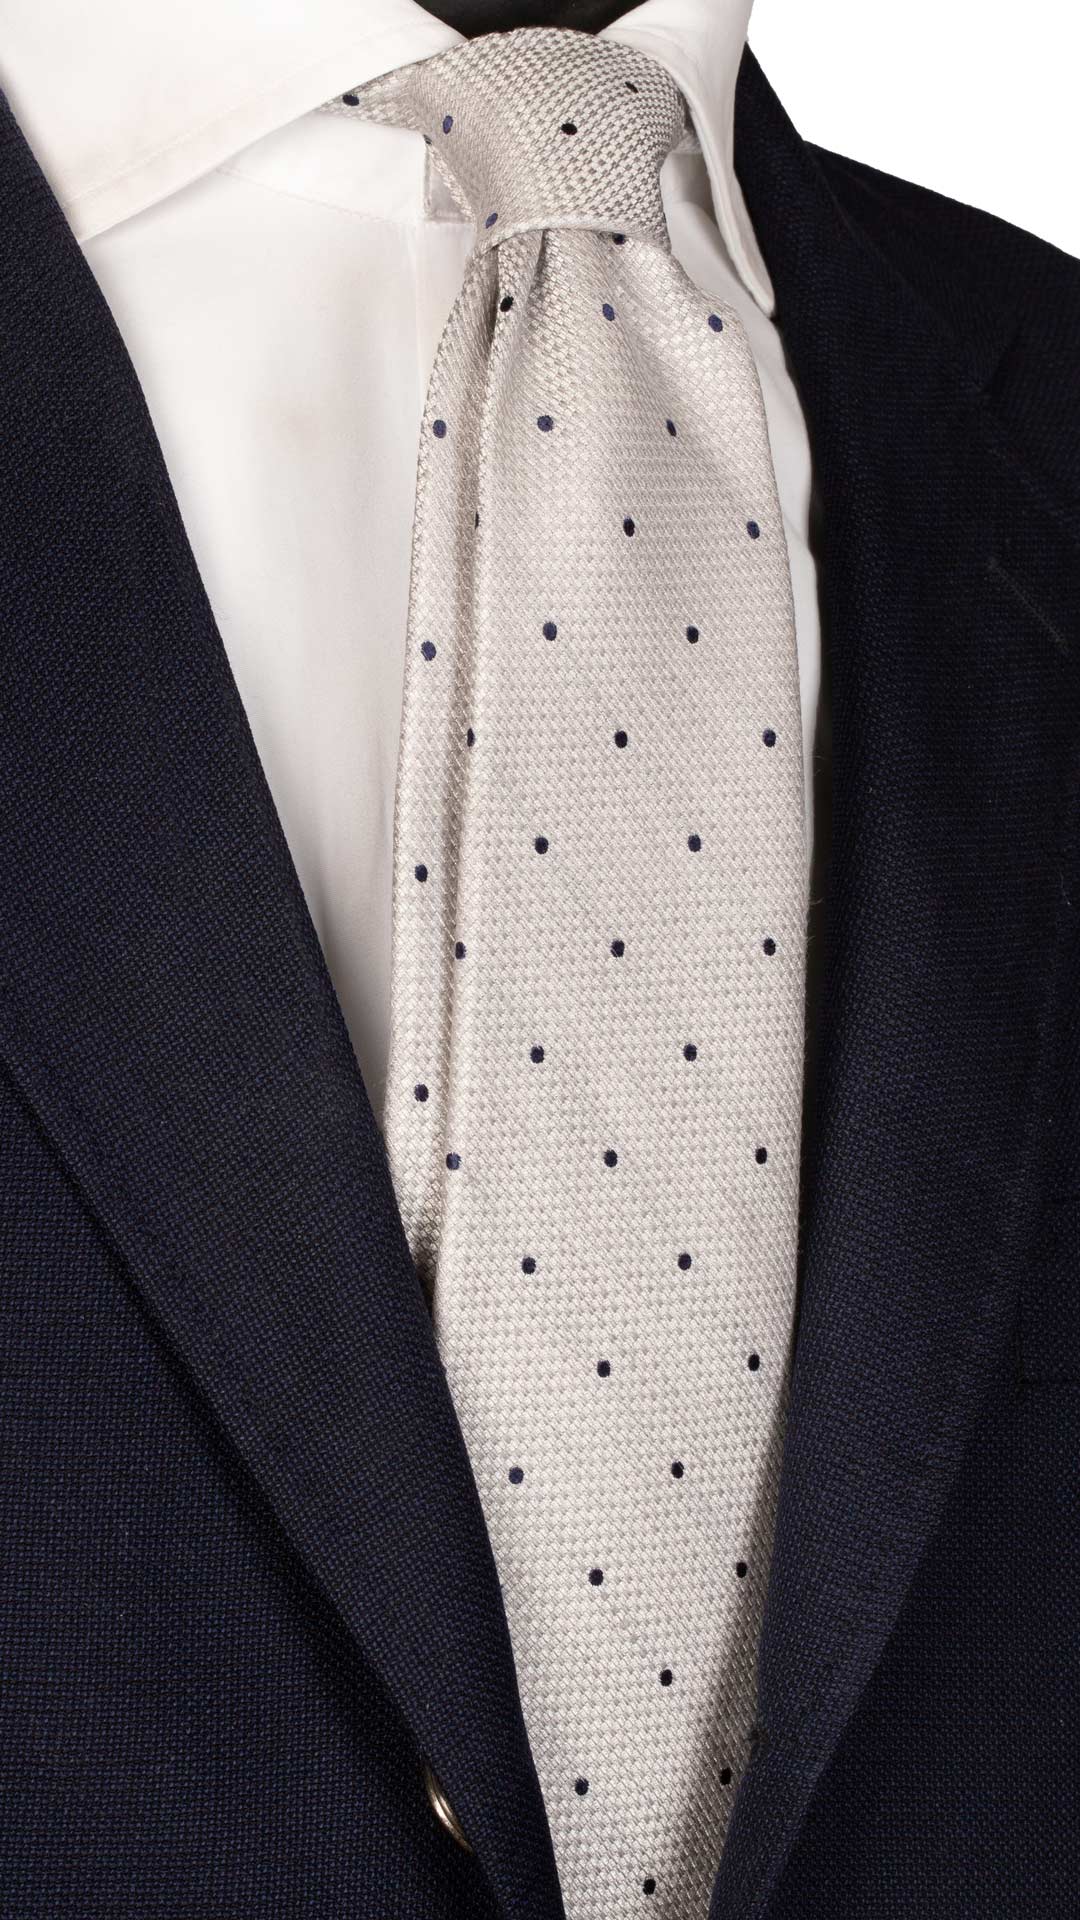 Cravatta da Cerimonia di Seta Grigio Argento Pois Blu Made in Italy Graffeo Cravatte